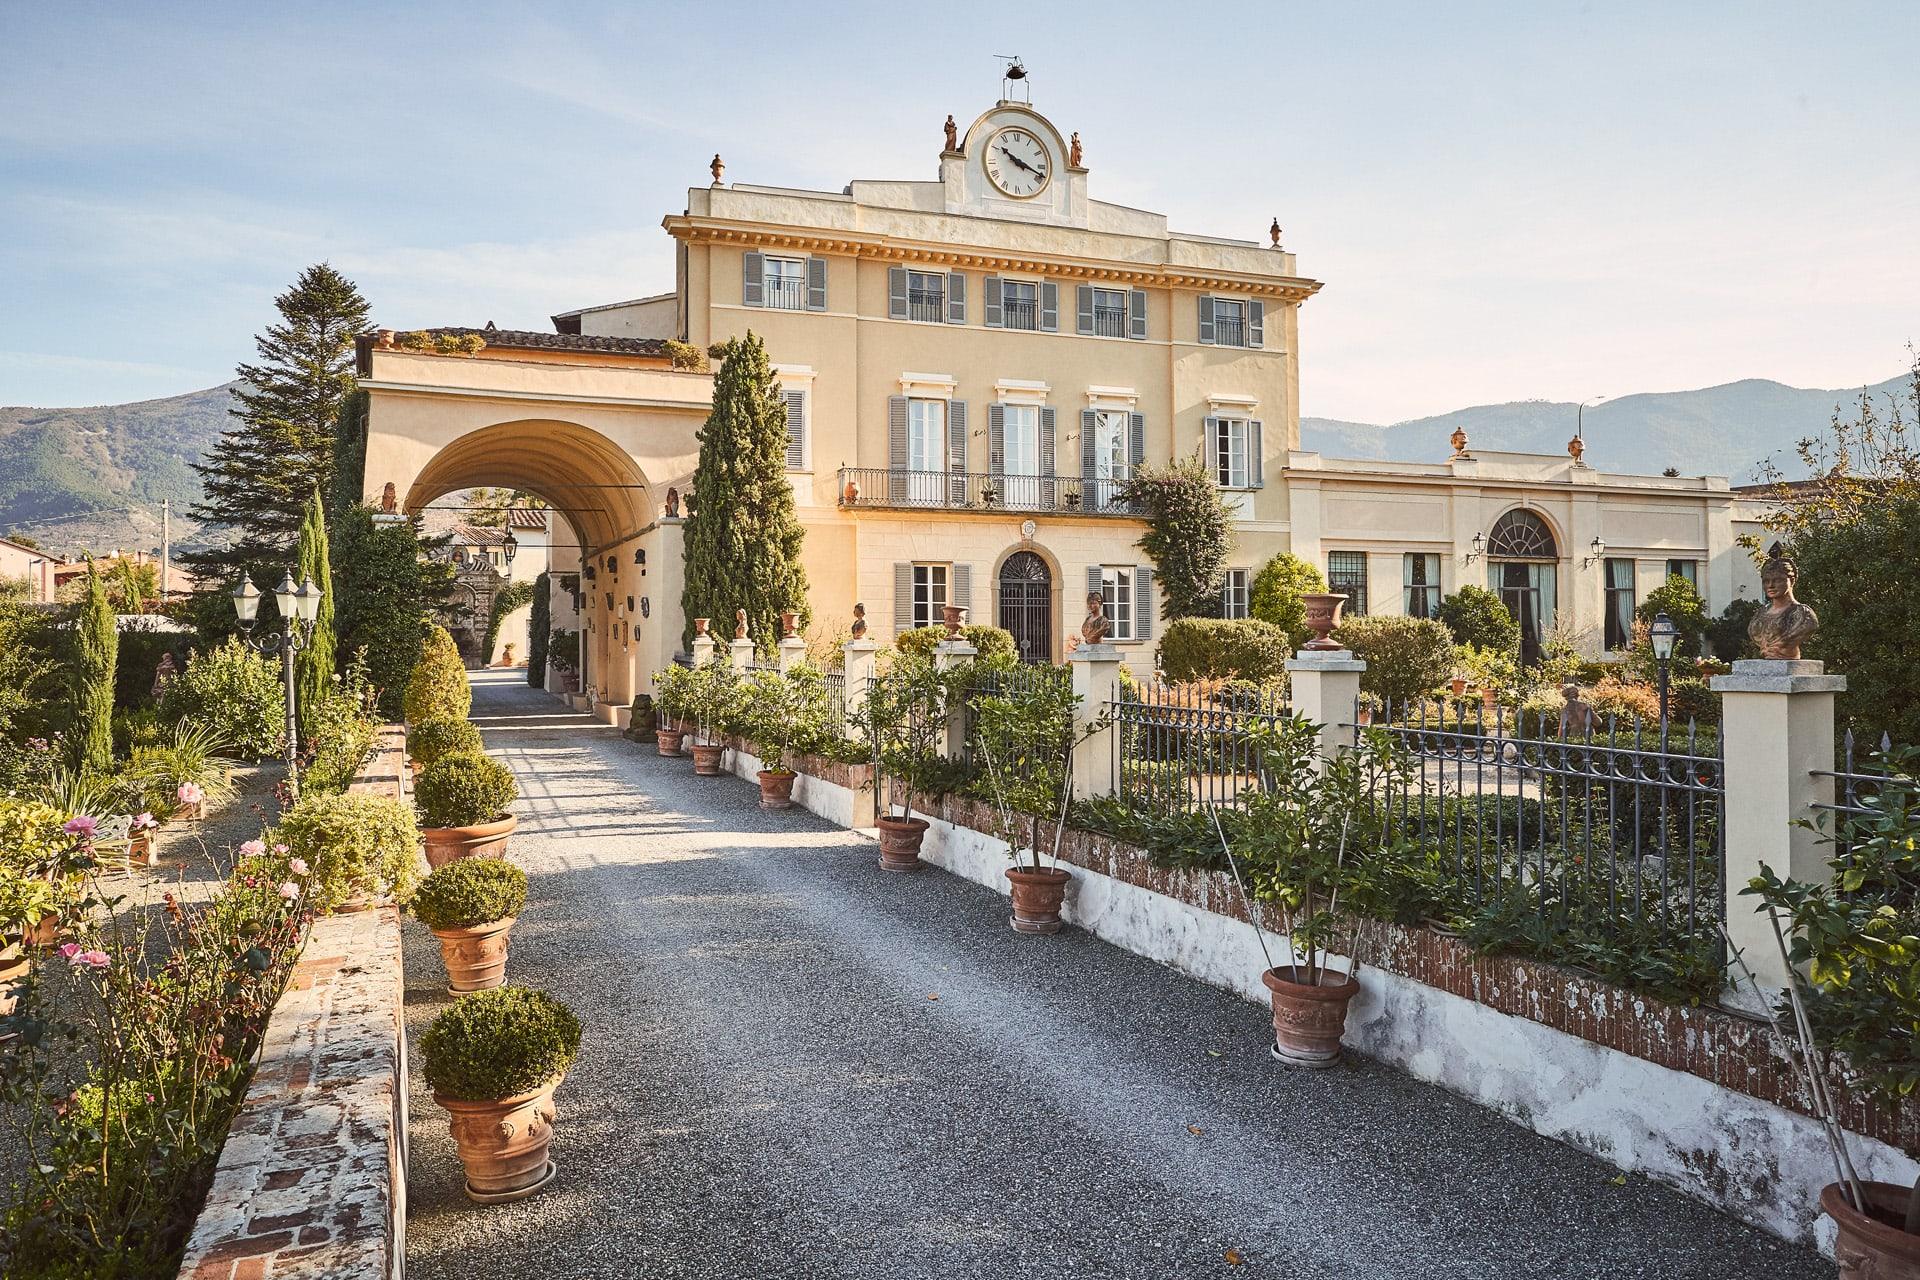 Villas, castles, and small hamlets for exclusive Preludio events